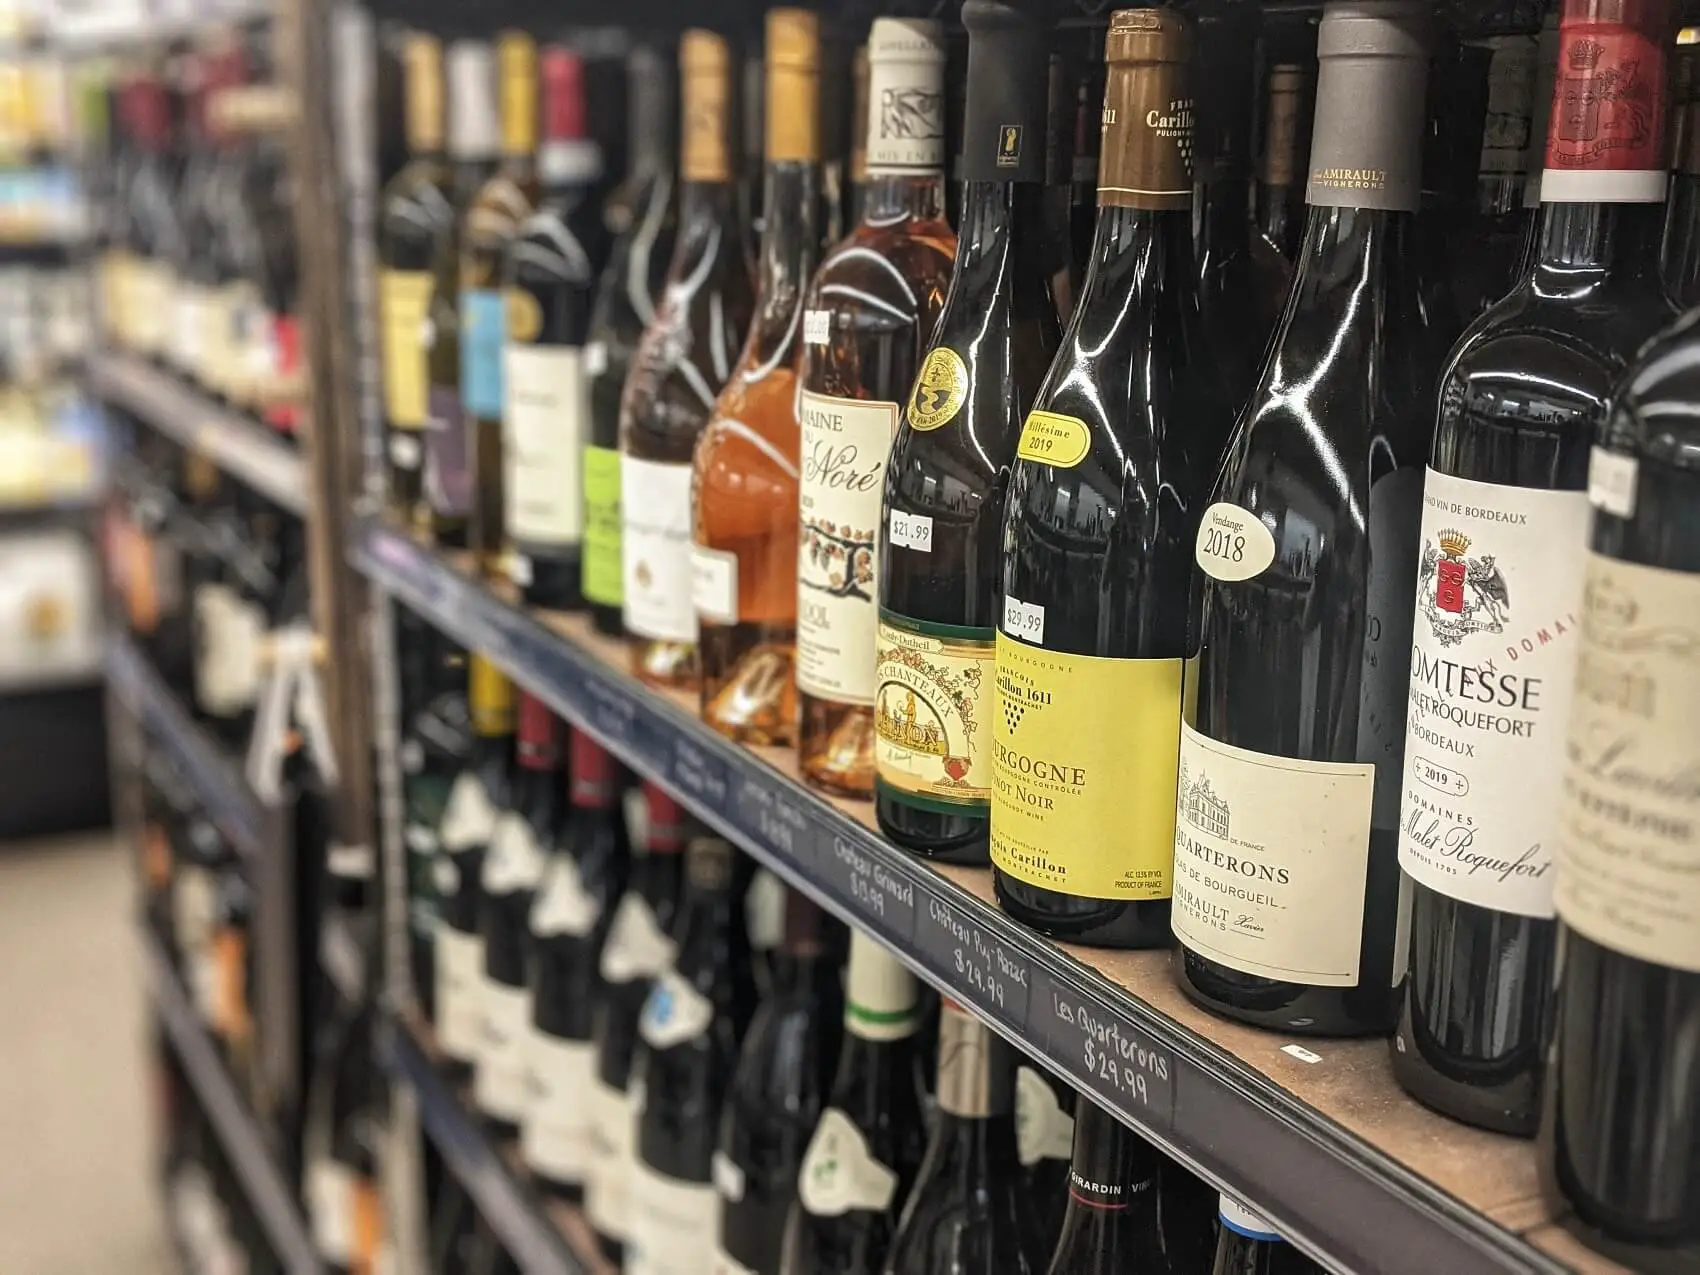 cabernet franc vs cabernet sauvignon - wine store shelf